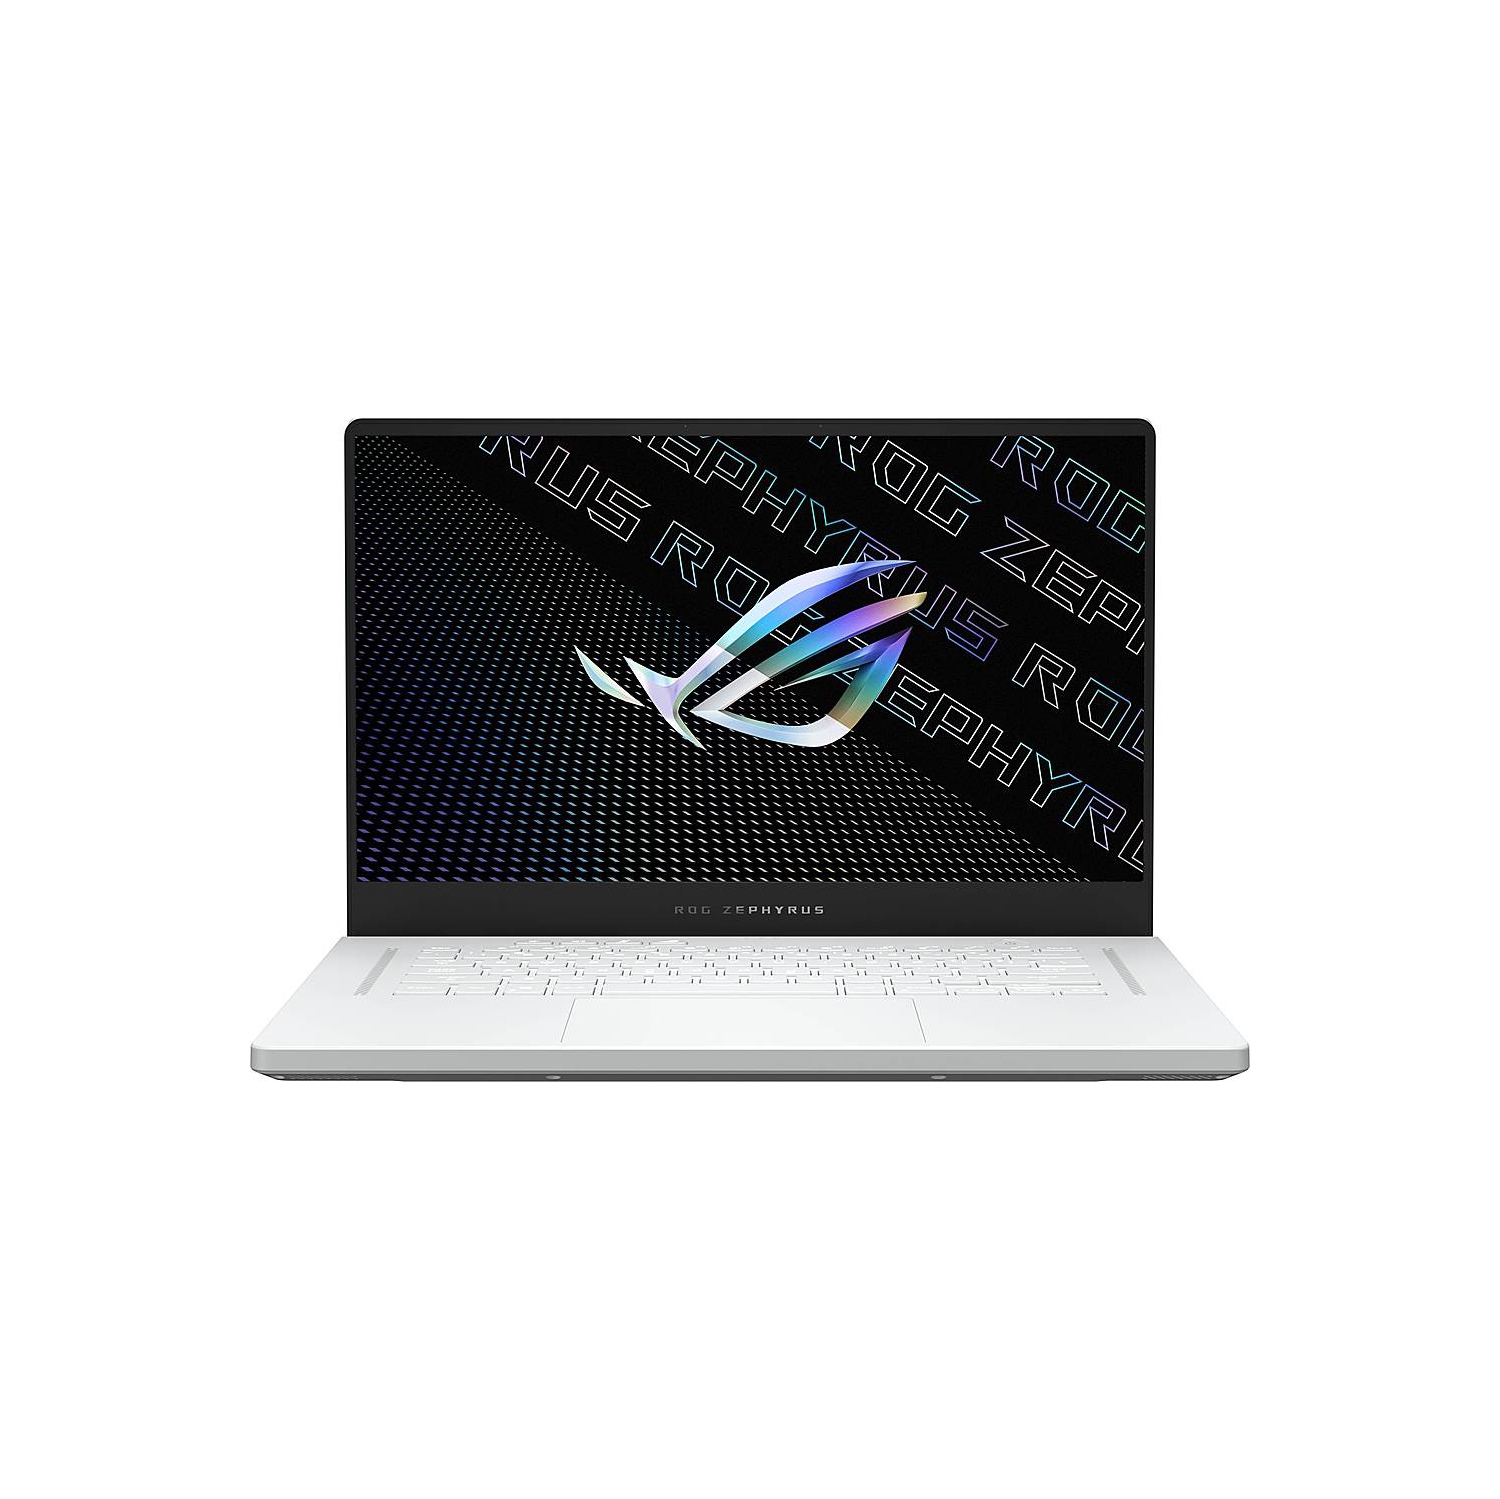 Custom ASUS ROG Zephyrus G15 Laptop (AMD Ryzen 9 5900HS, 32GB RAM, 1TB SSD, NVIDIA RTX 3080 Max-Q, Win 10 Pro)